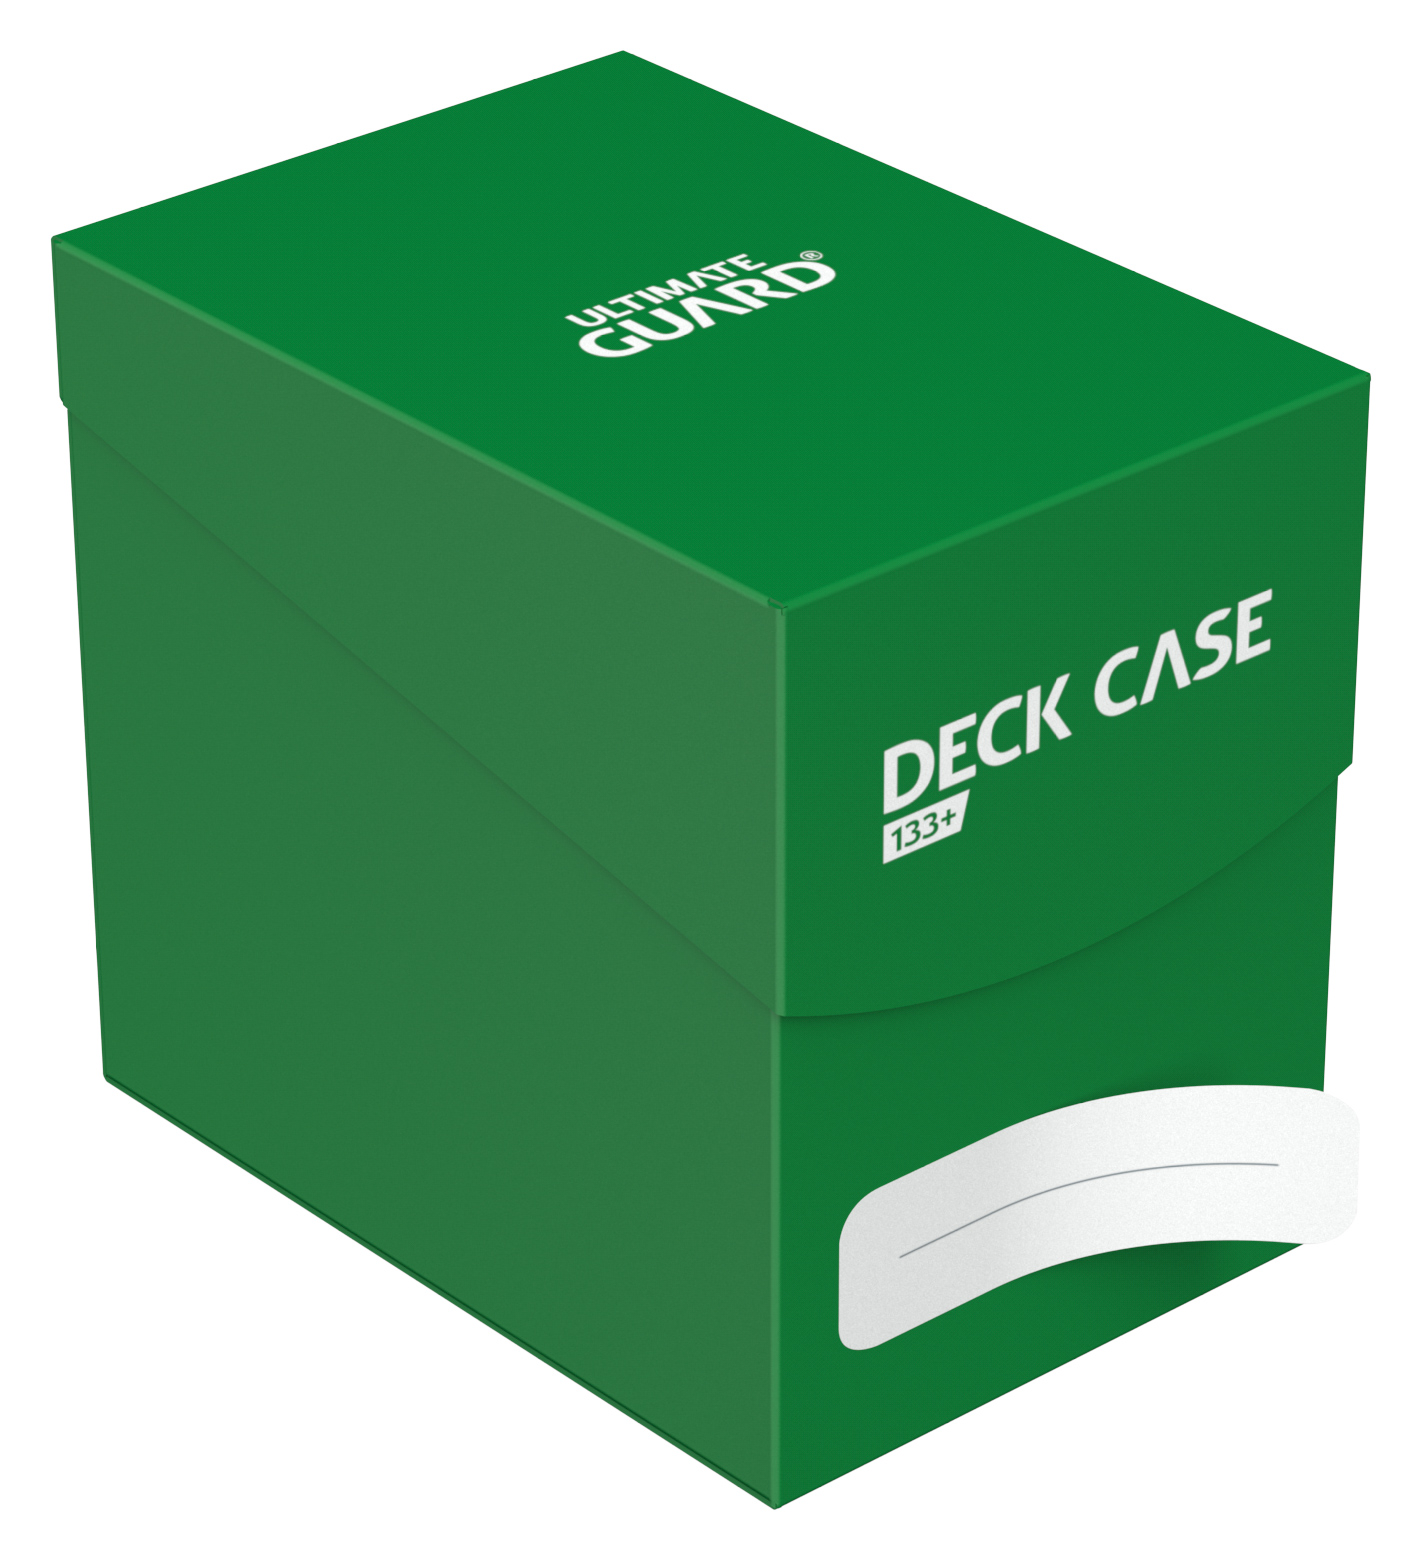 Ultimate Guard Card Deck Box Deck Case 133+ Green Grün